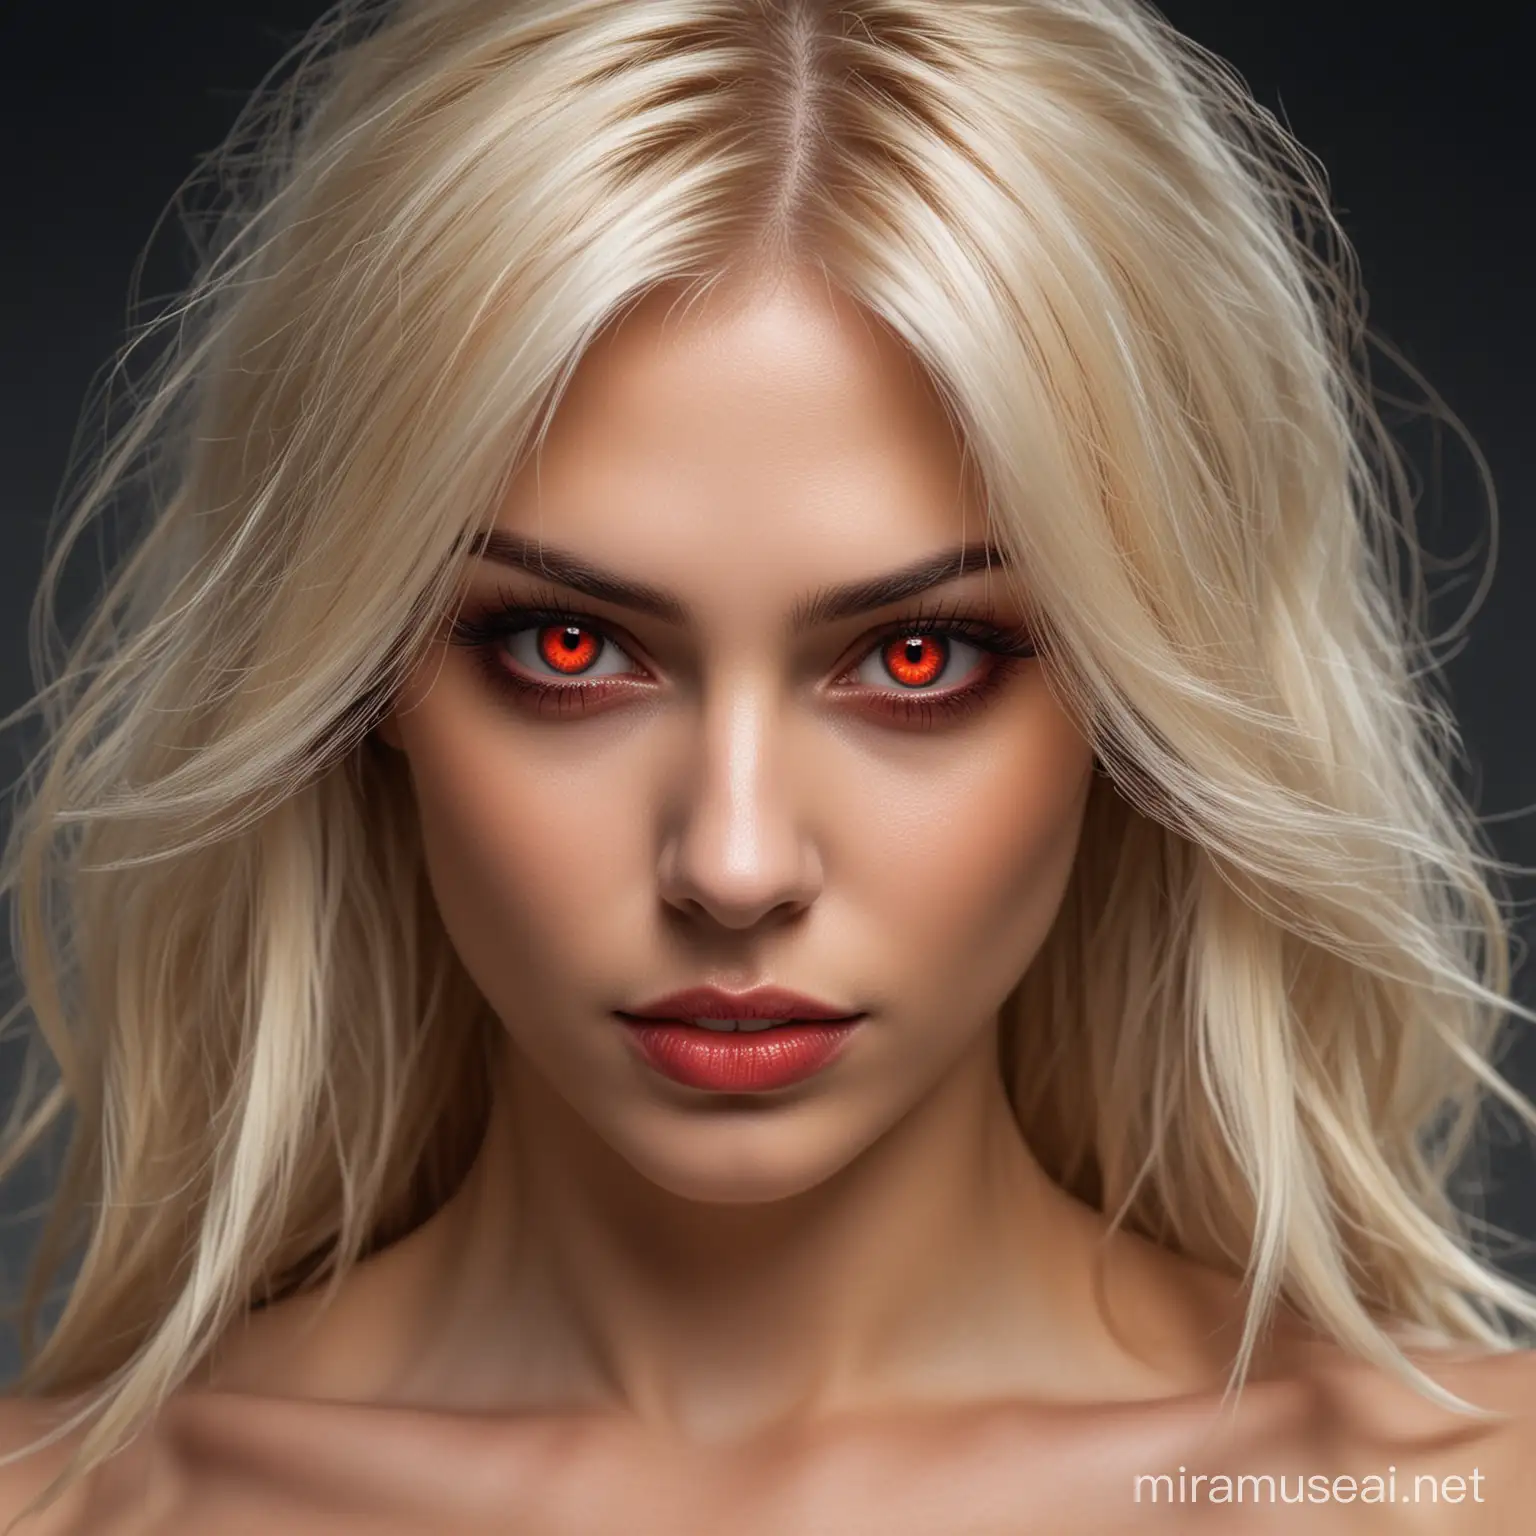 Blonde Woman with Fiery Eyes Sensual Demoness Portrait